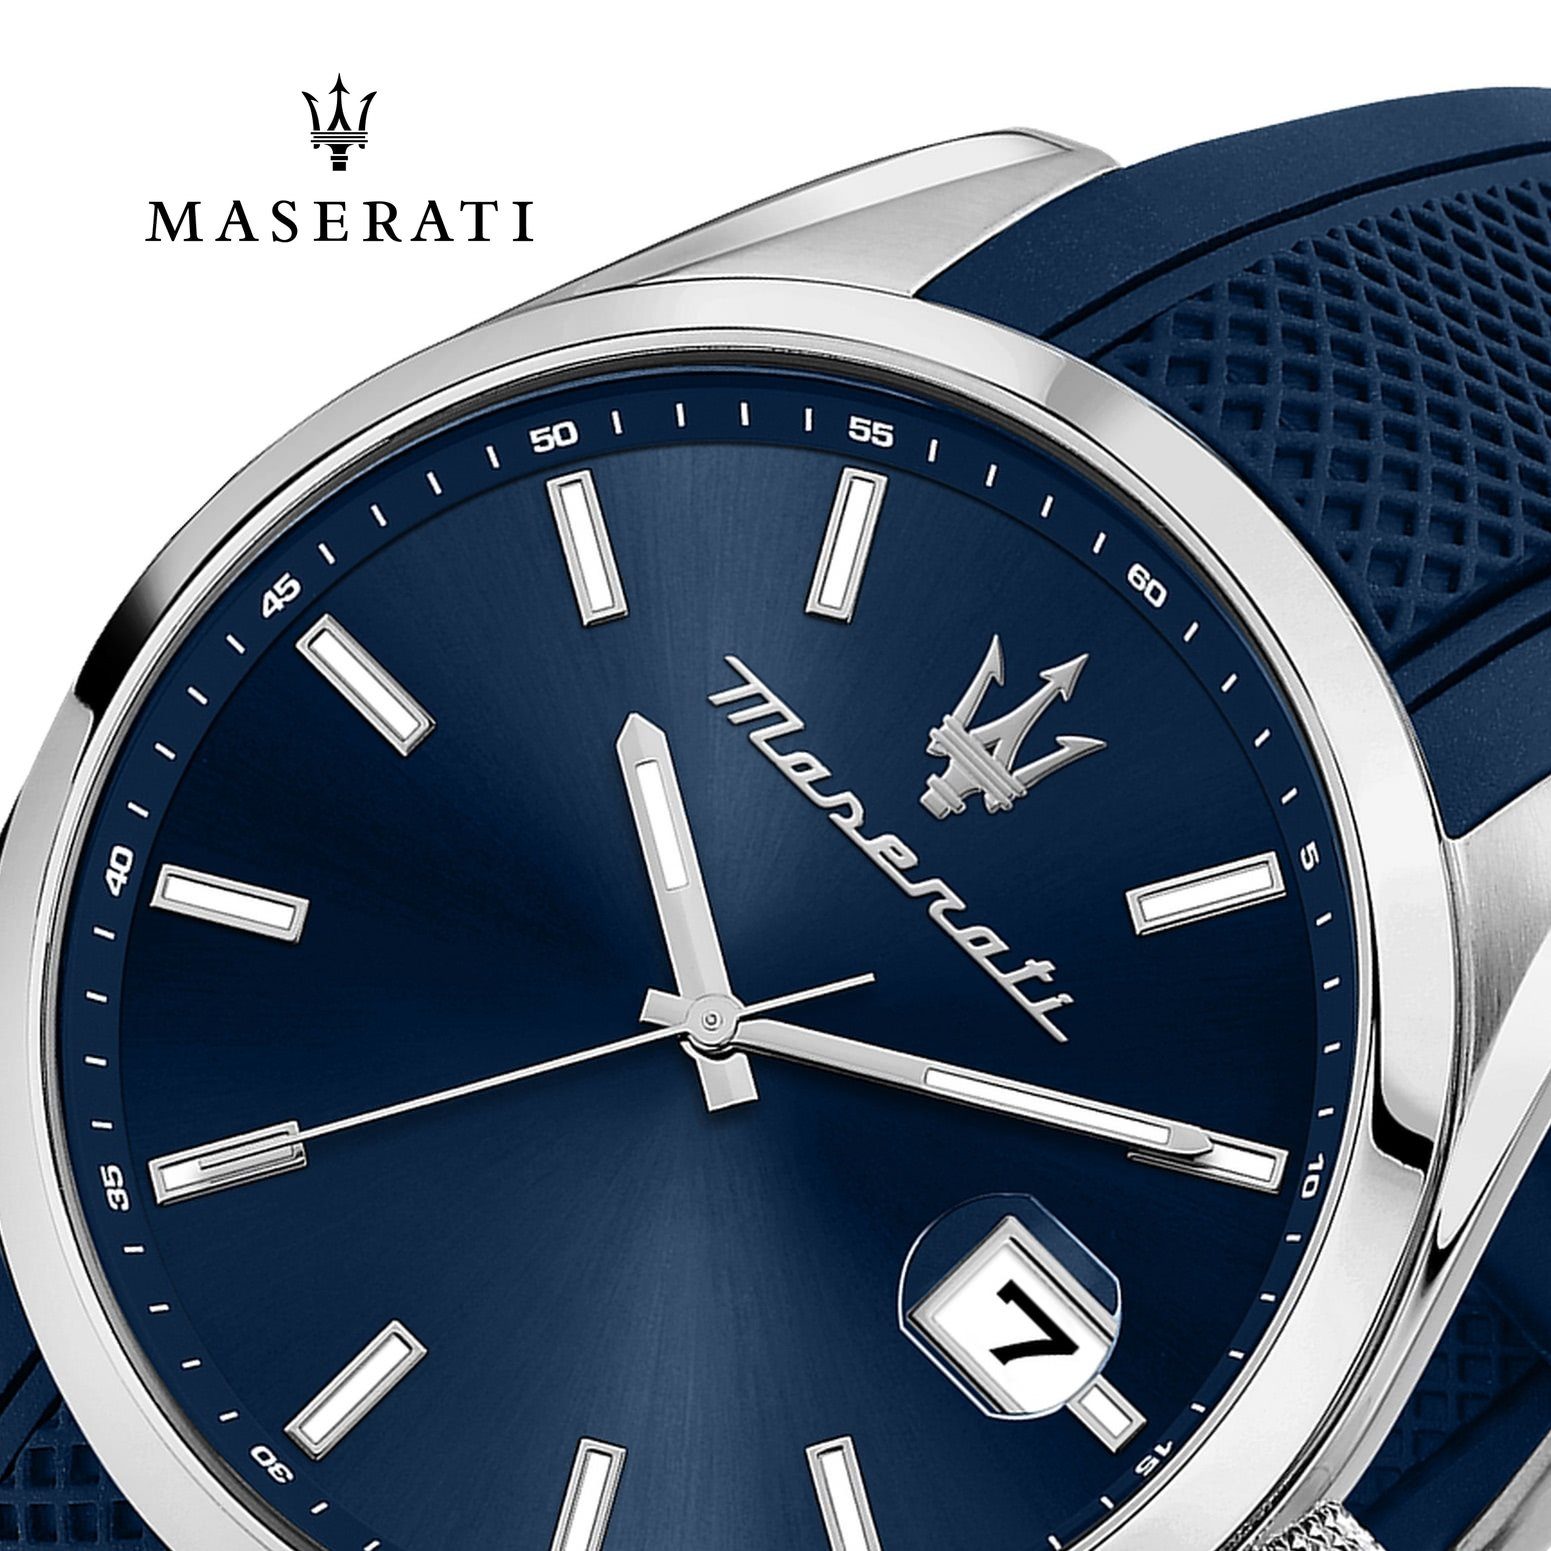 MASERATI Quarzuhr Maserati Dornschließe Made-In groß Attrazione, Armband Silikonarmband, rund, Italy, Herren ( Herrenuhr 43mm) ca